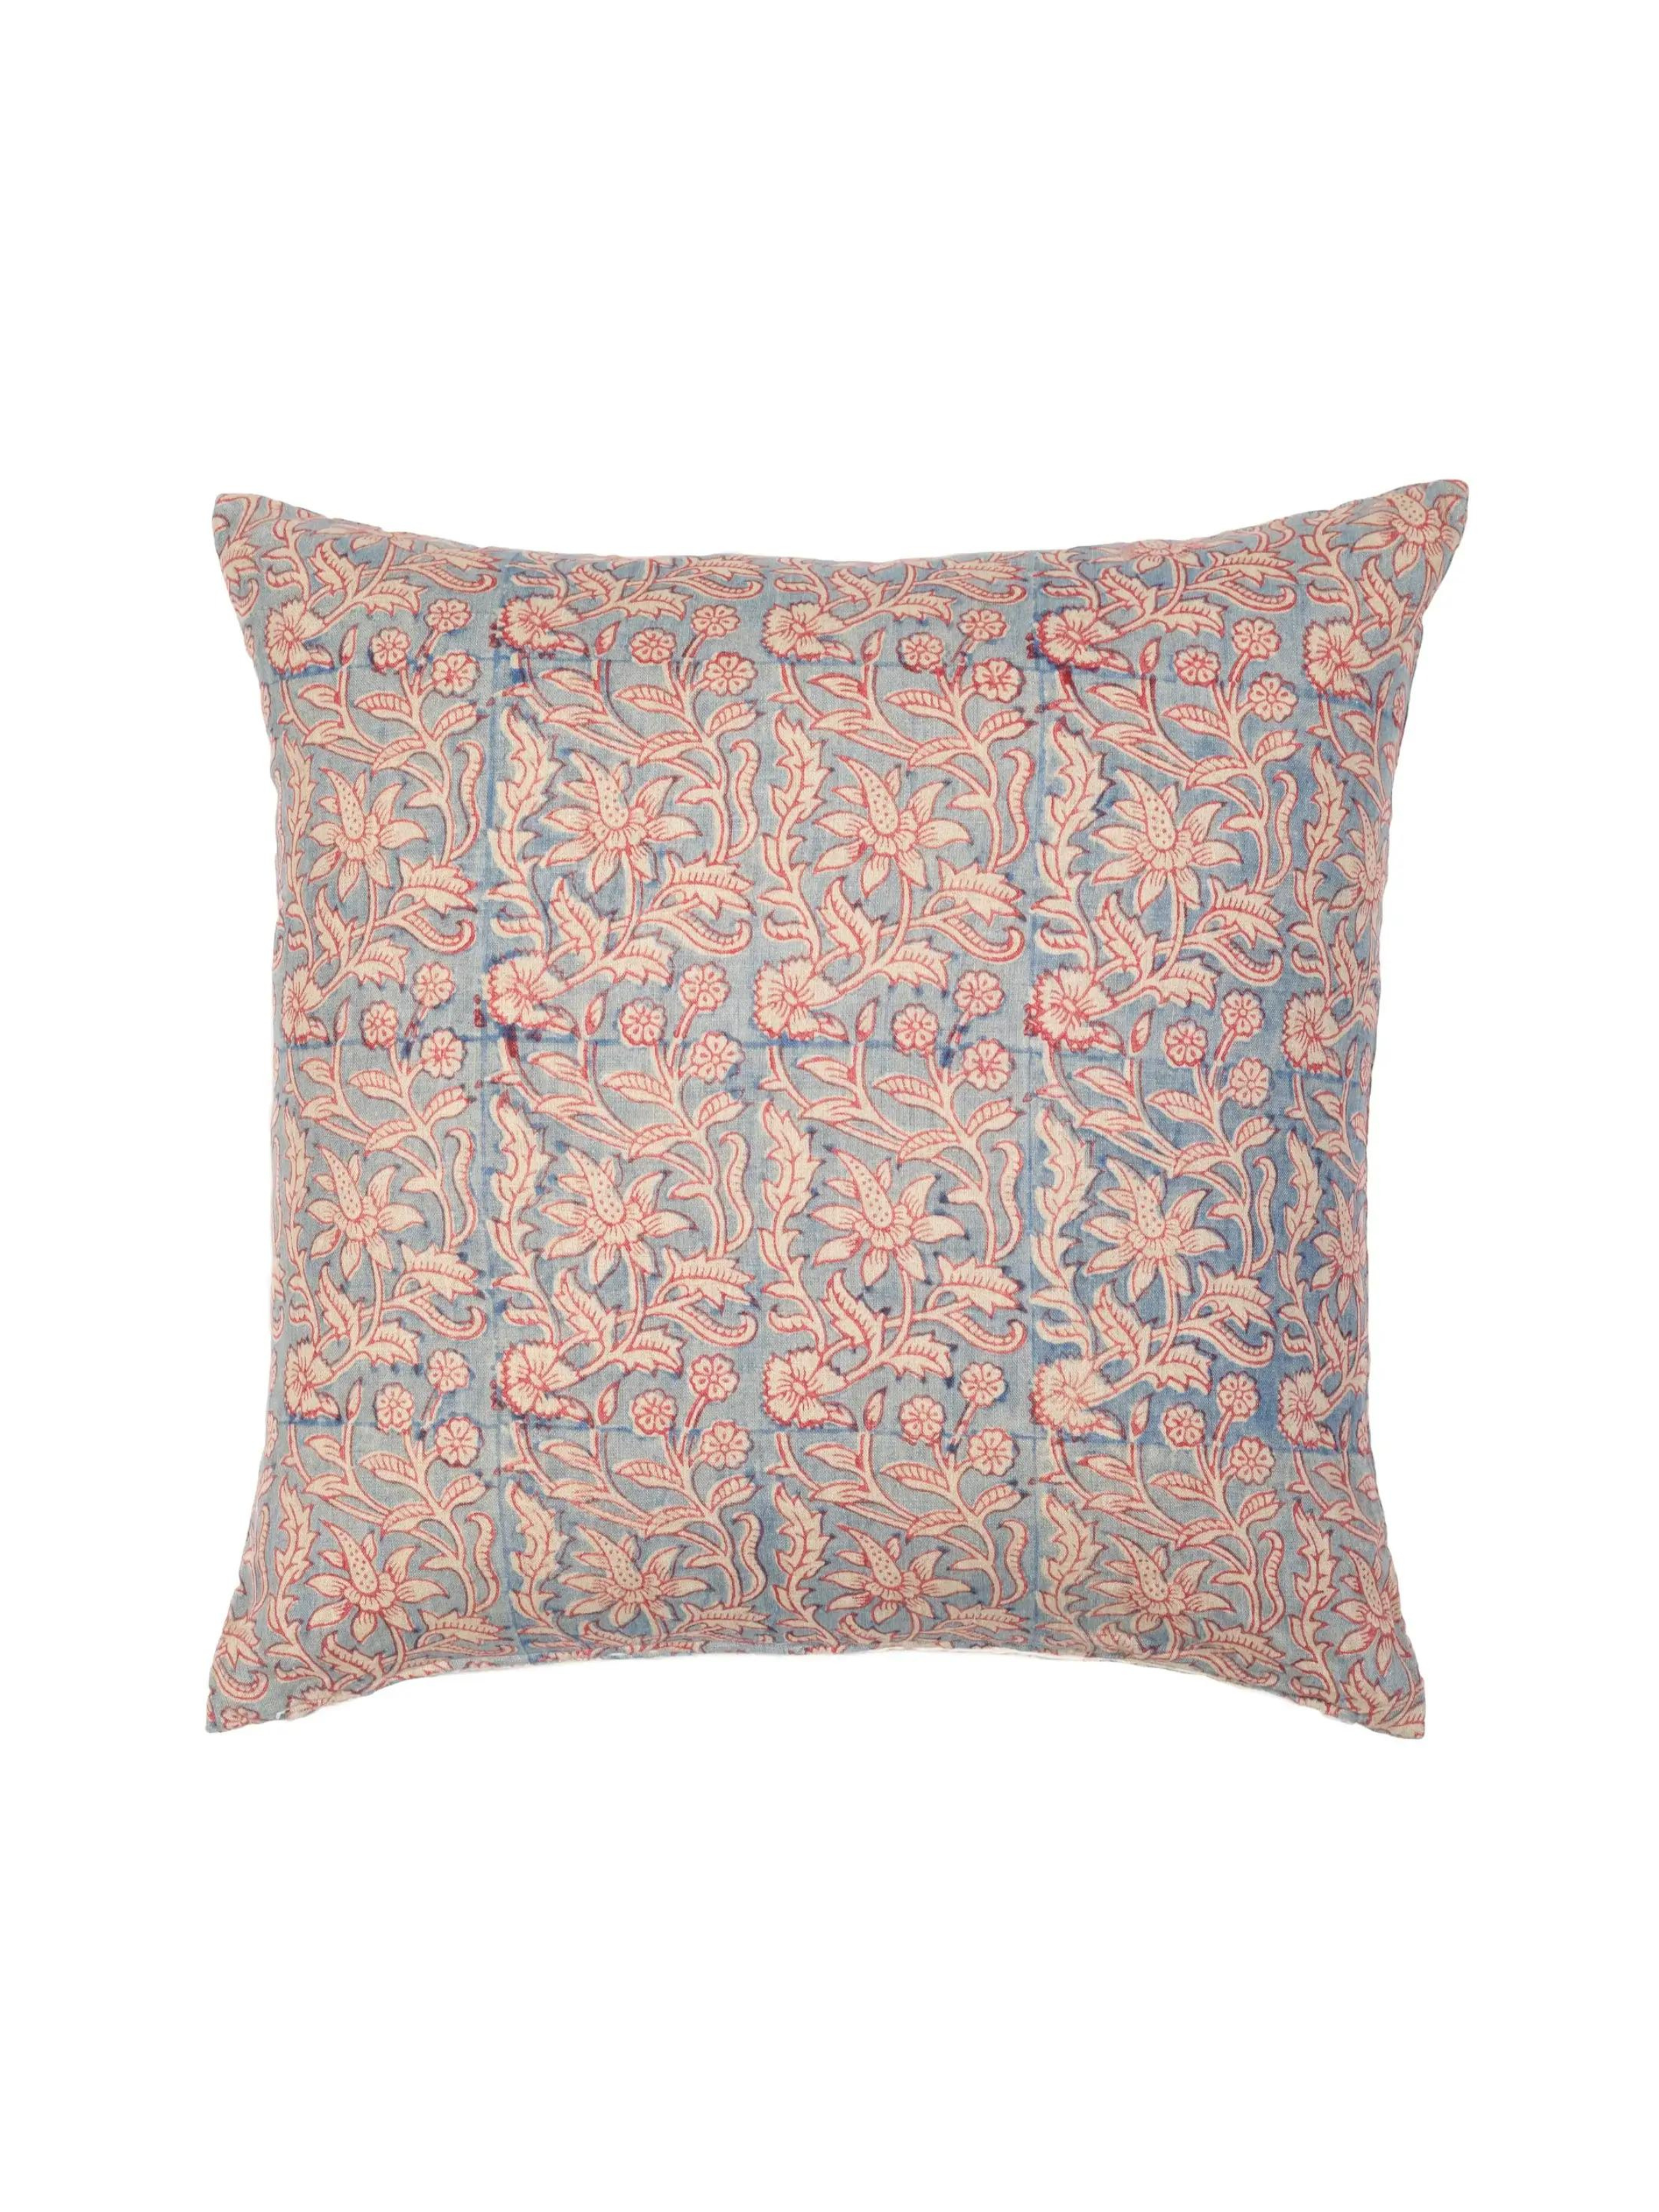 Gardenia Vintage Red/Blue Decorative Pillow Cover